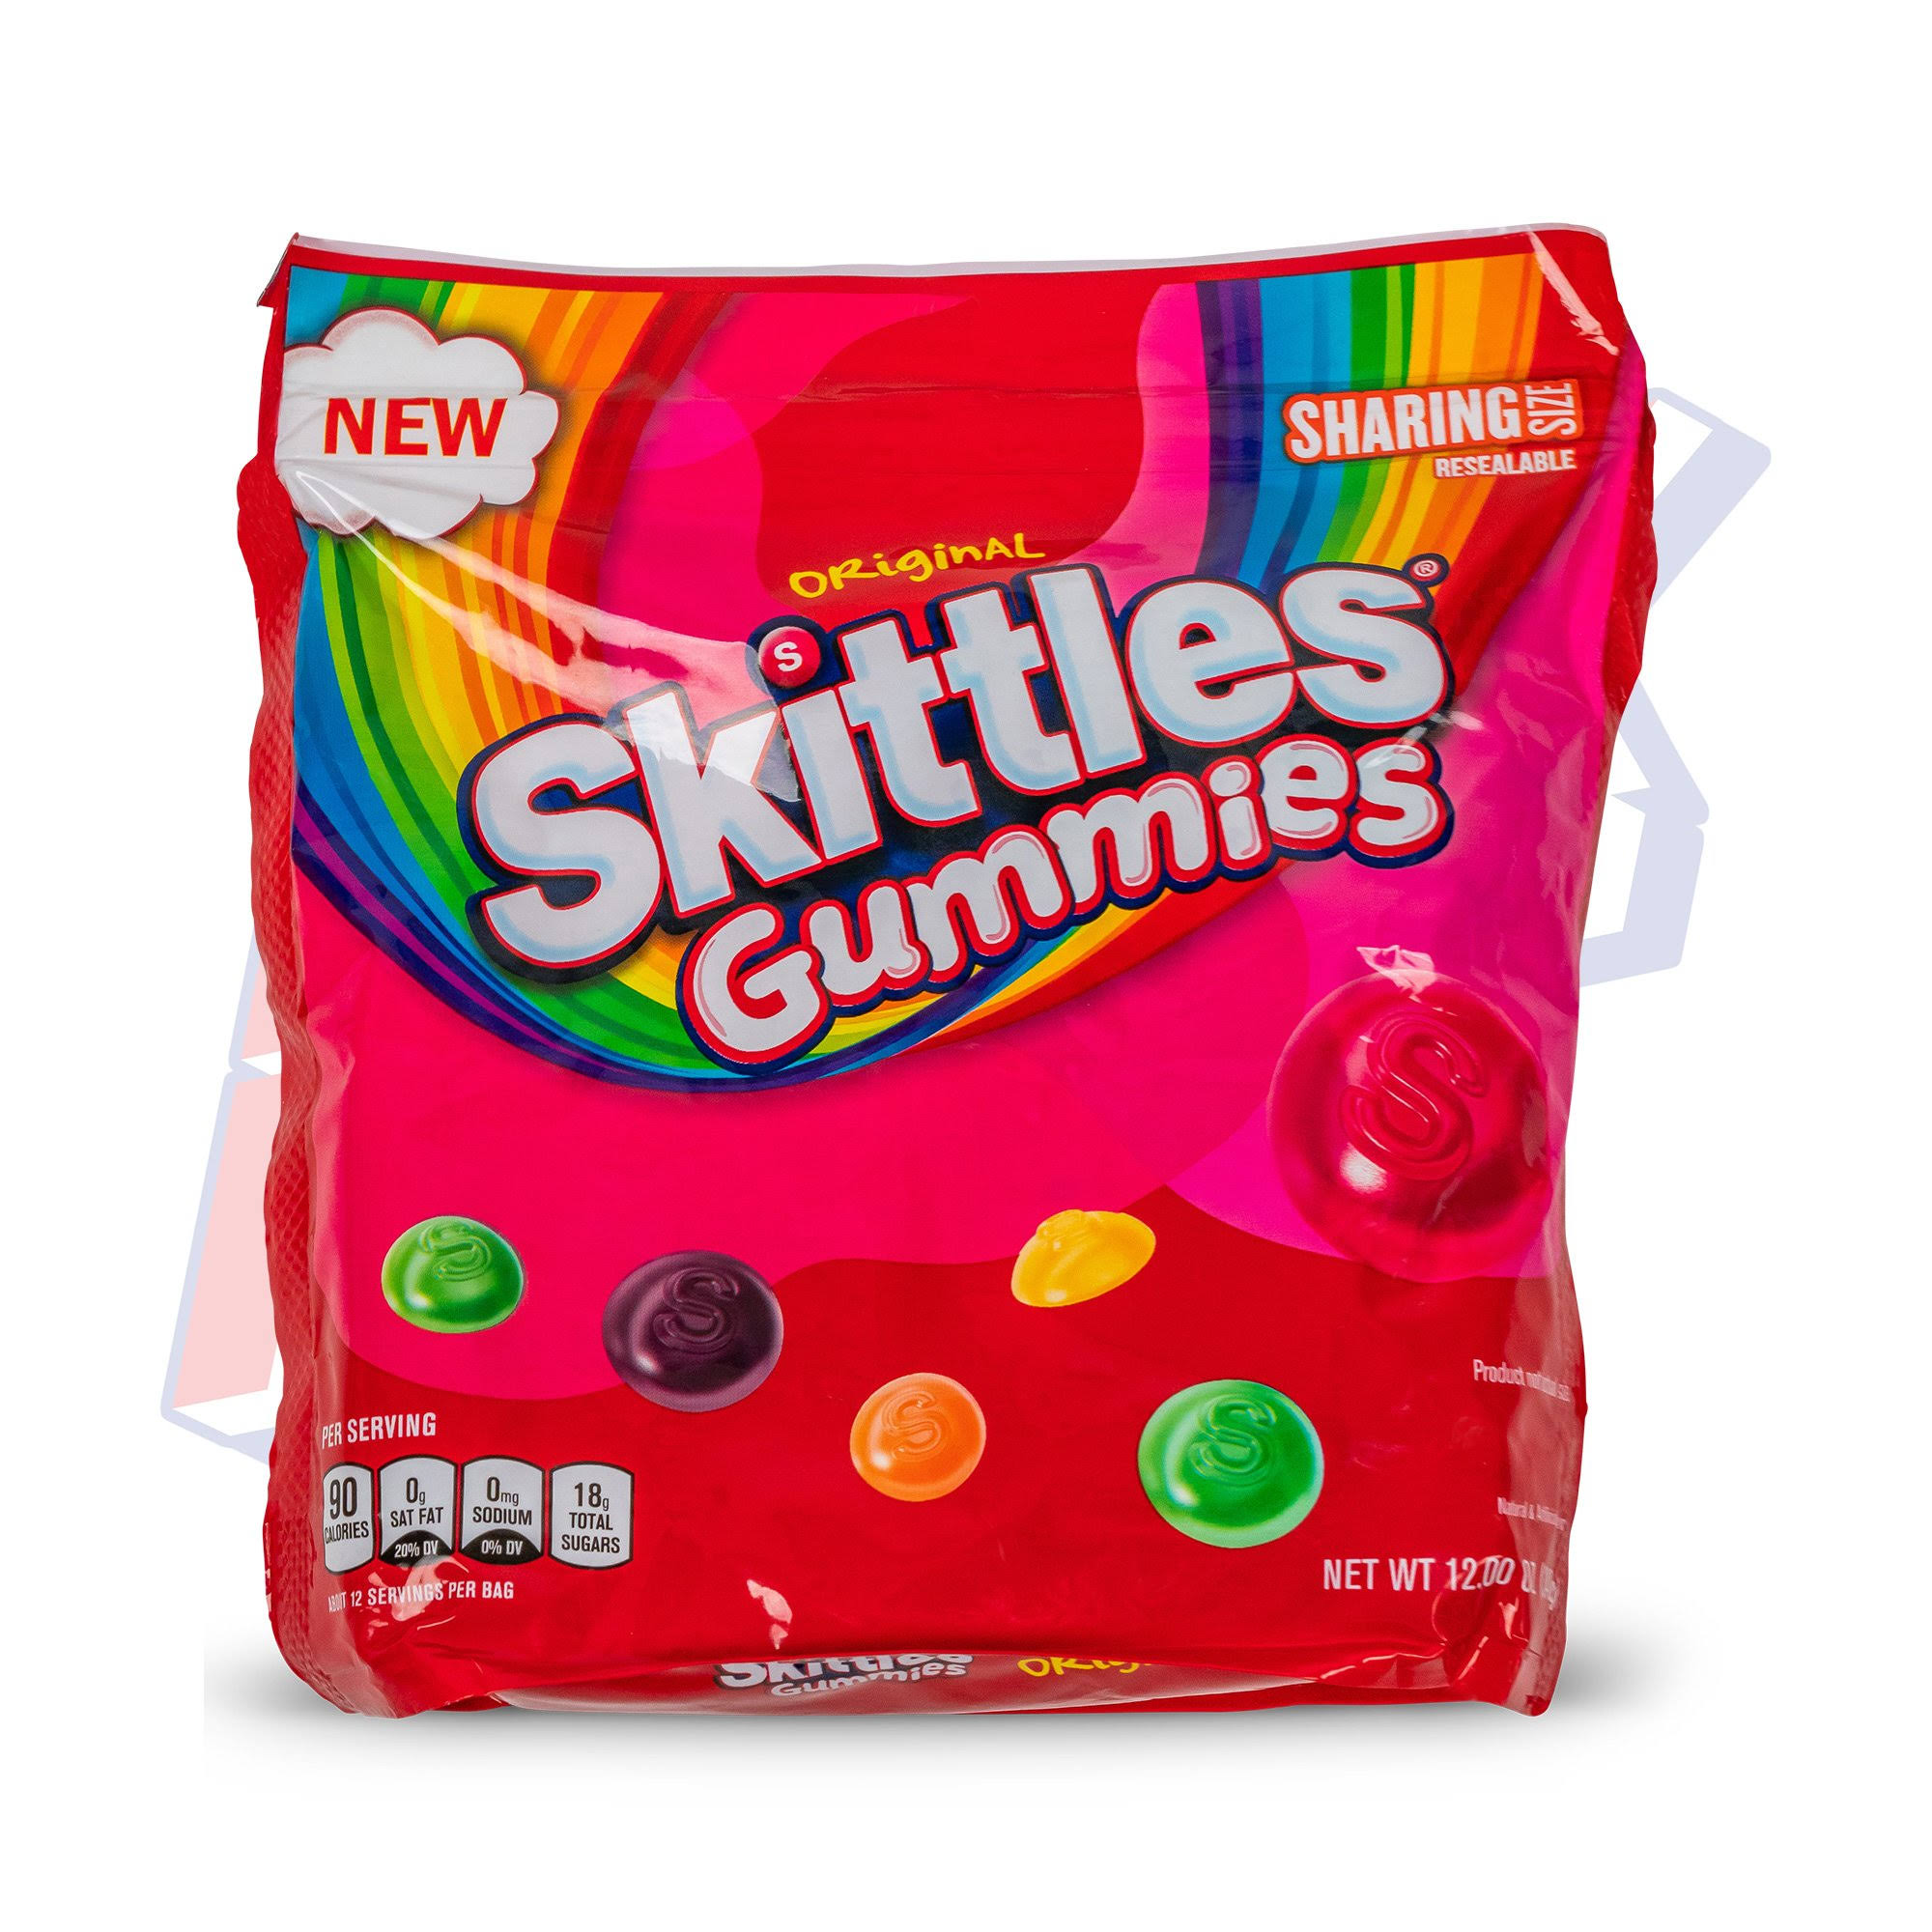 Skittles Gummies Share Size - 12oz